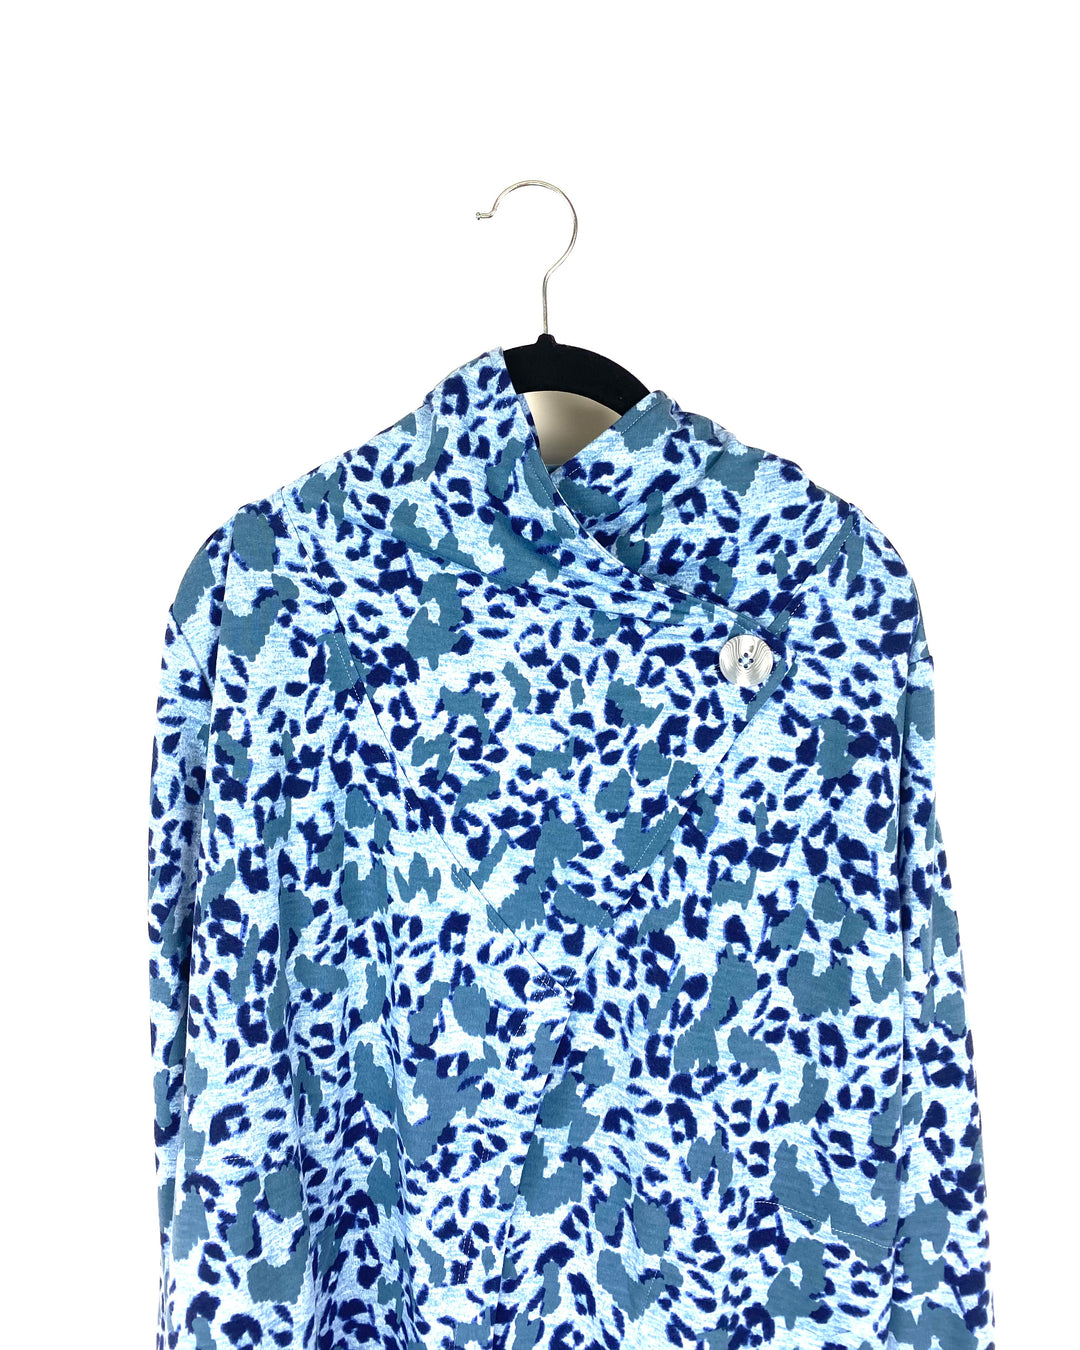 Blue Leopard Print Long Sleeve Cardigan - Small